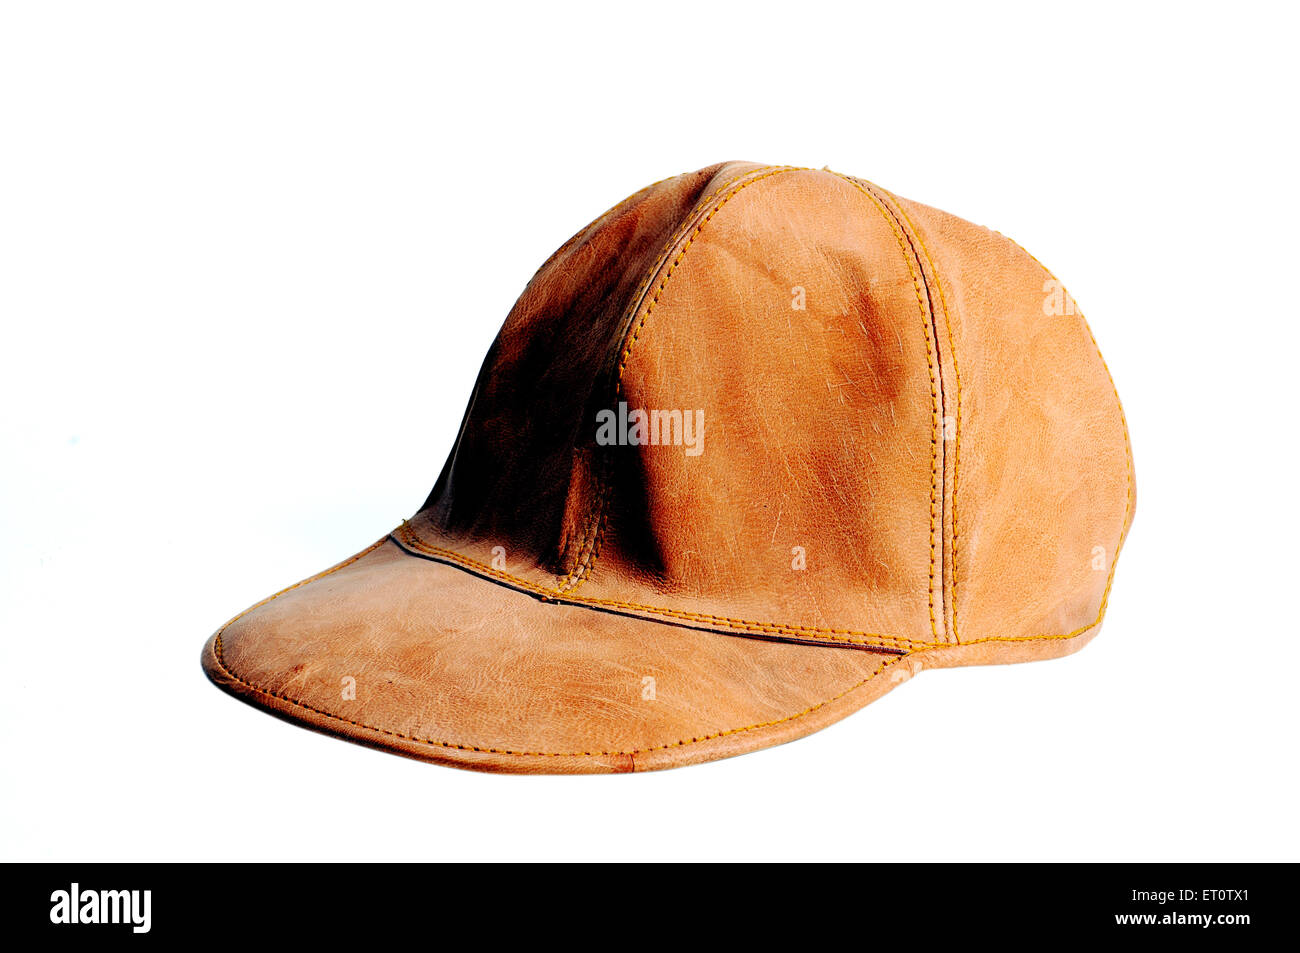 Leather cap on white background ; India Stock Photo